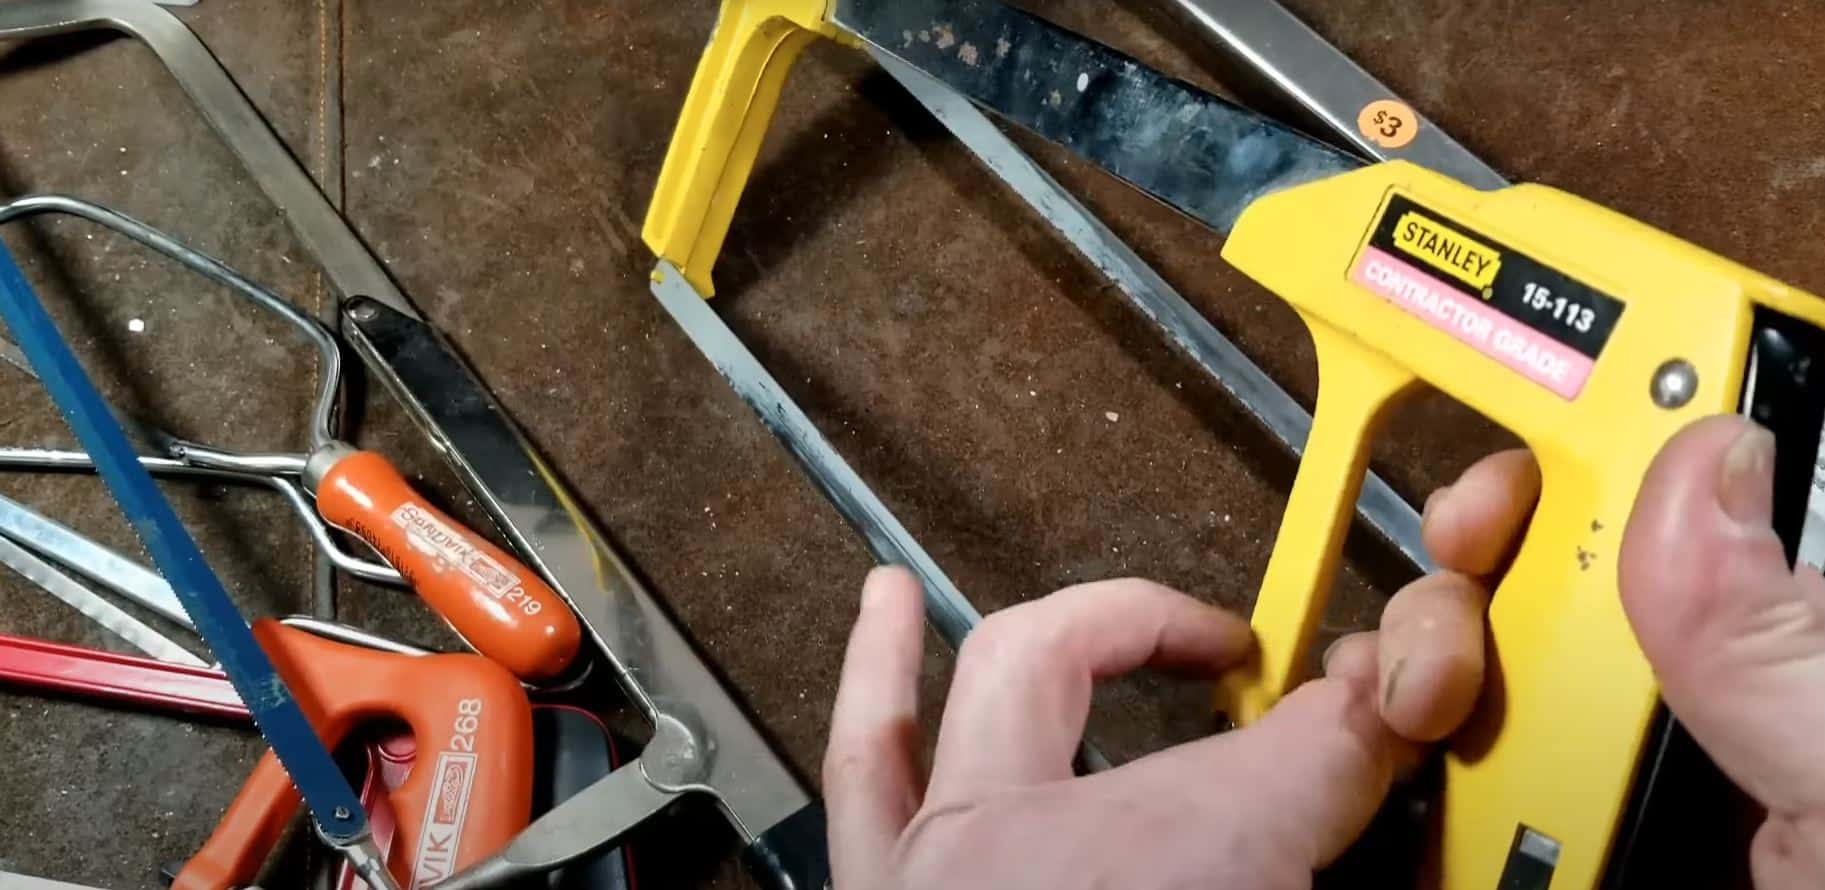 Can a hacksaw cut concrete?